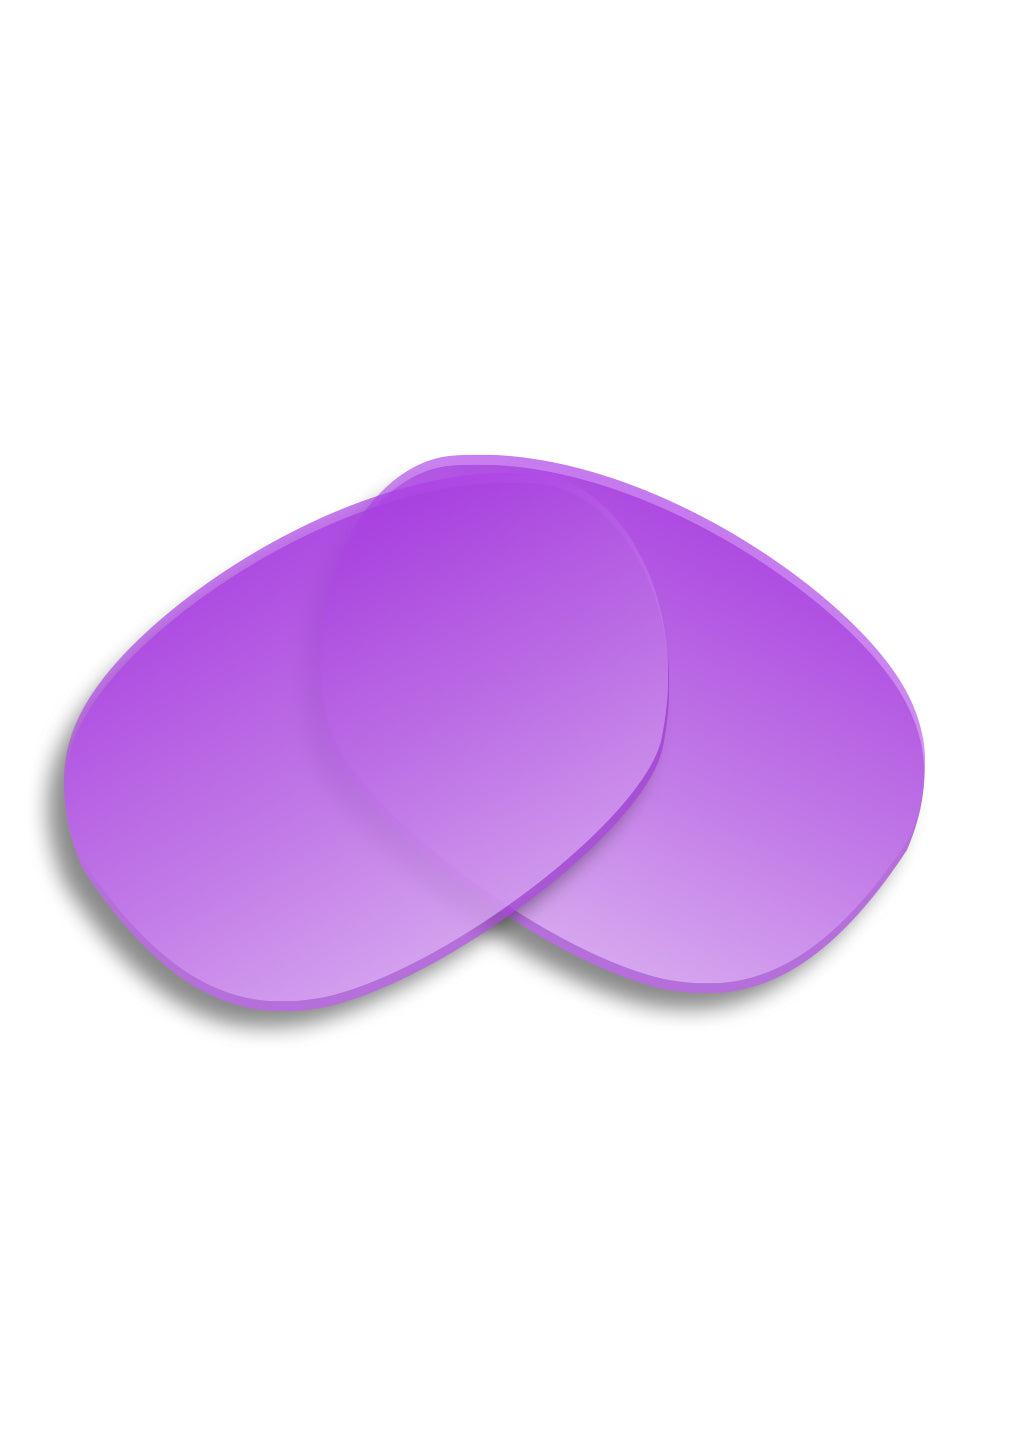 Extra lenses for Titan V2 sunglasses. This is gradient purple.